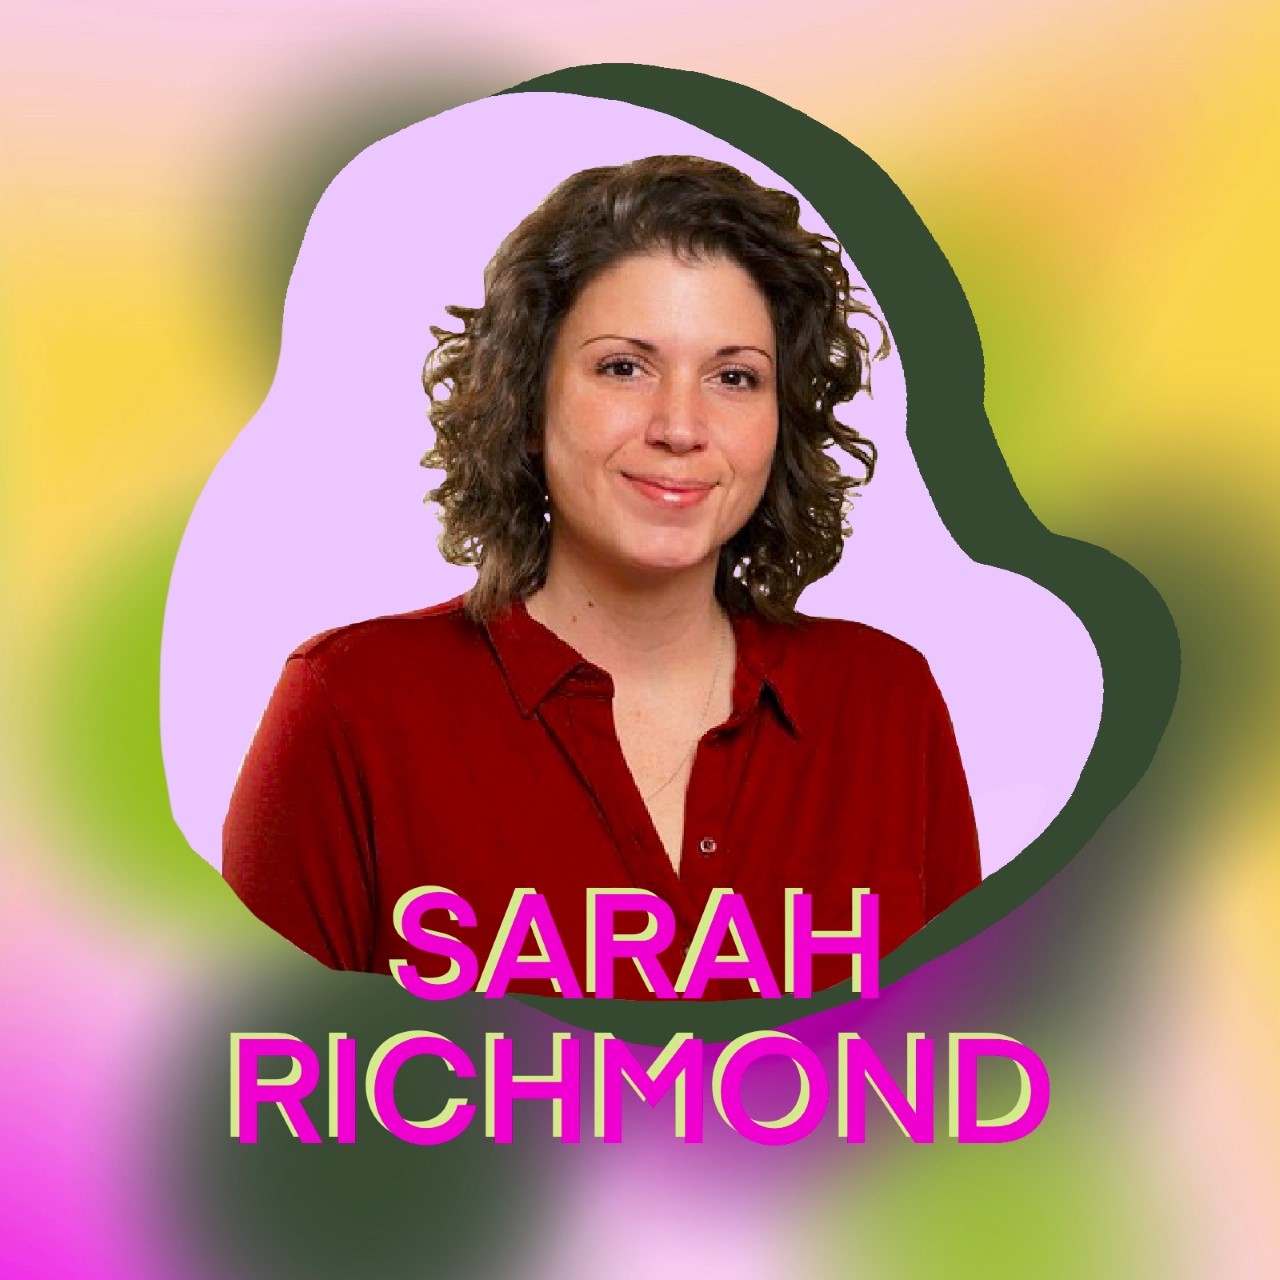 "Sarah Richmond" superimposed over her headshot